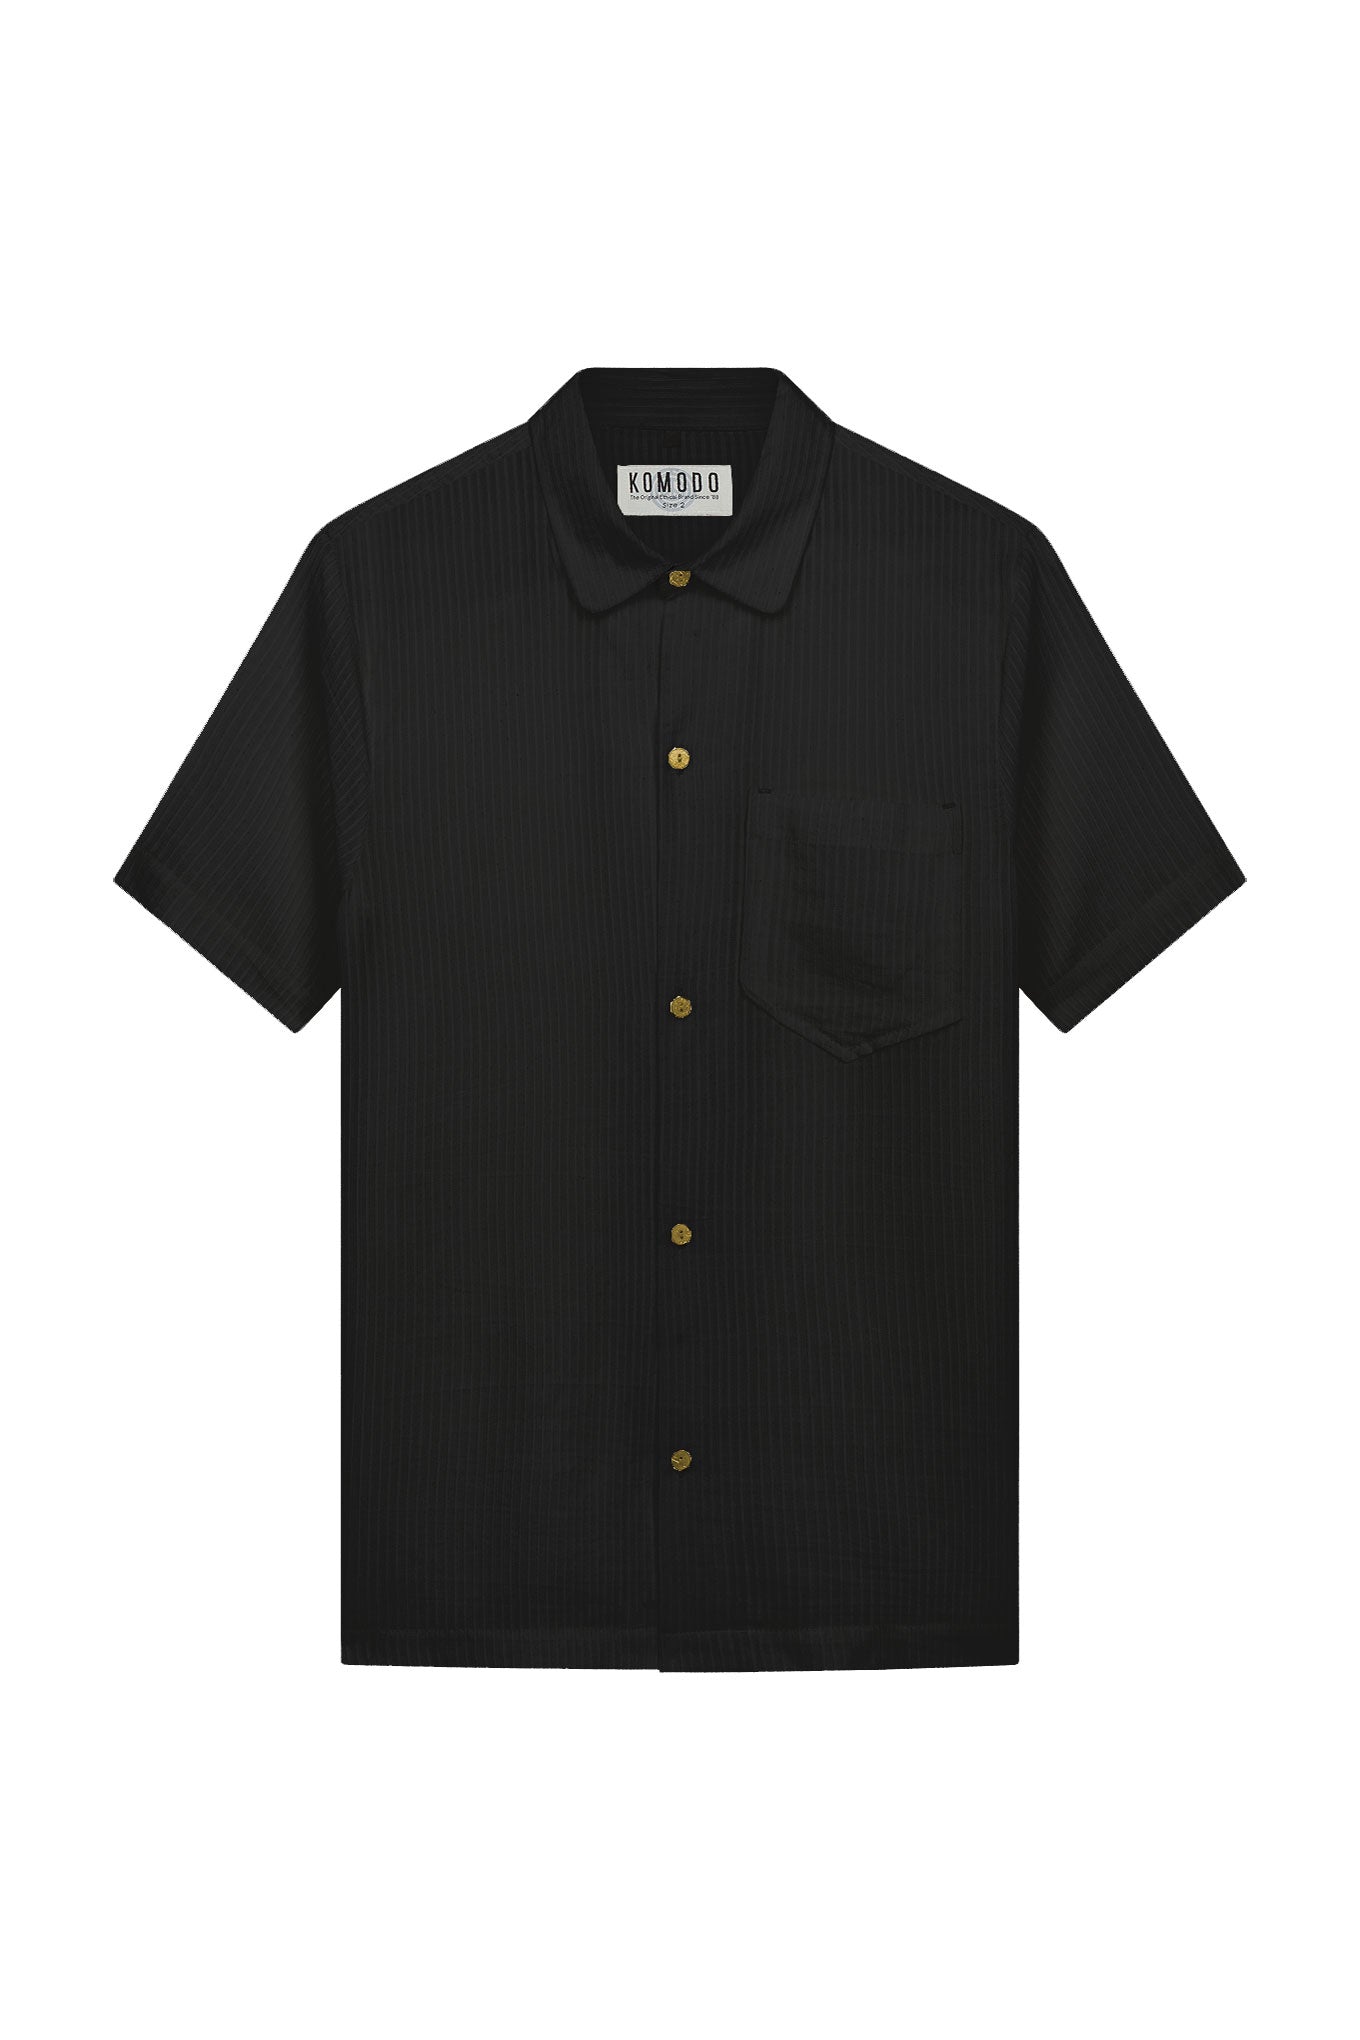 SPINDRIFT Corn Fabric Shirt - Black